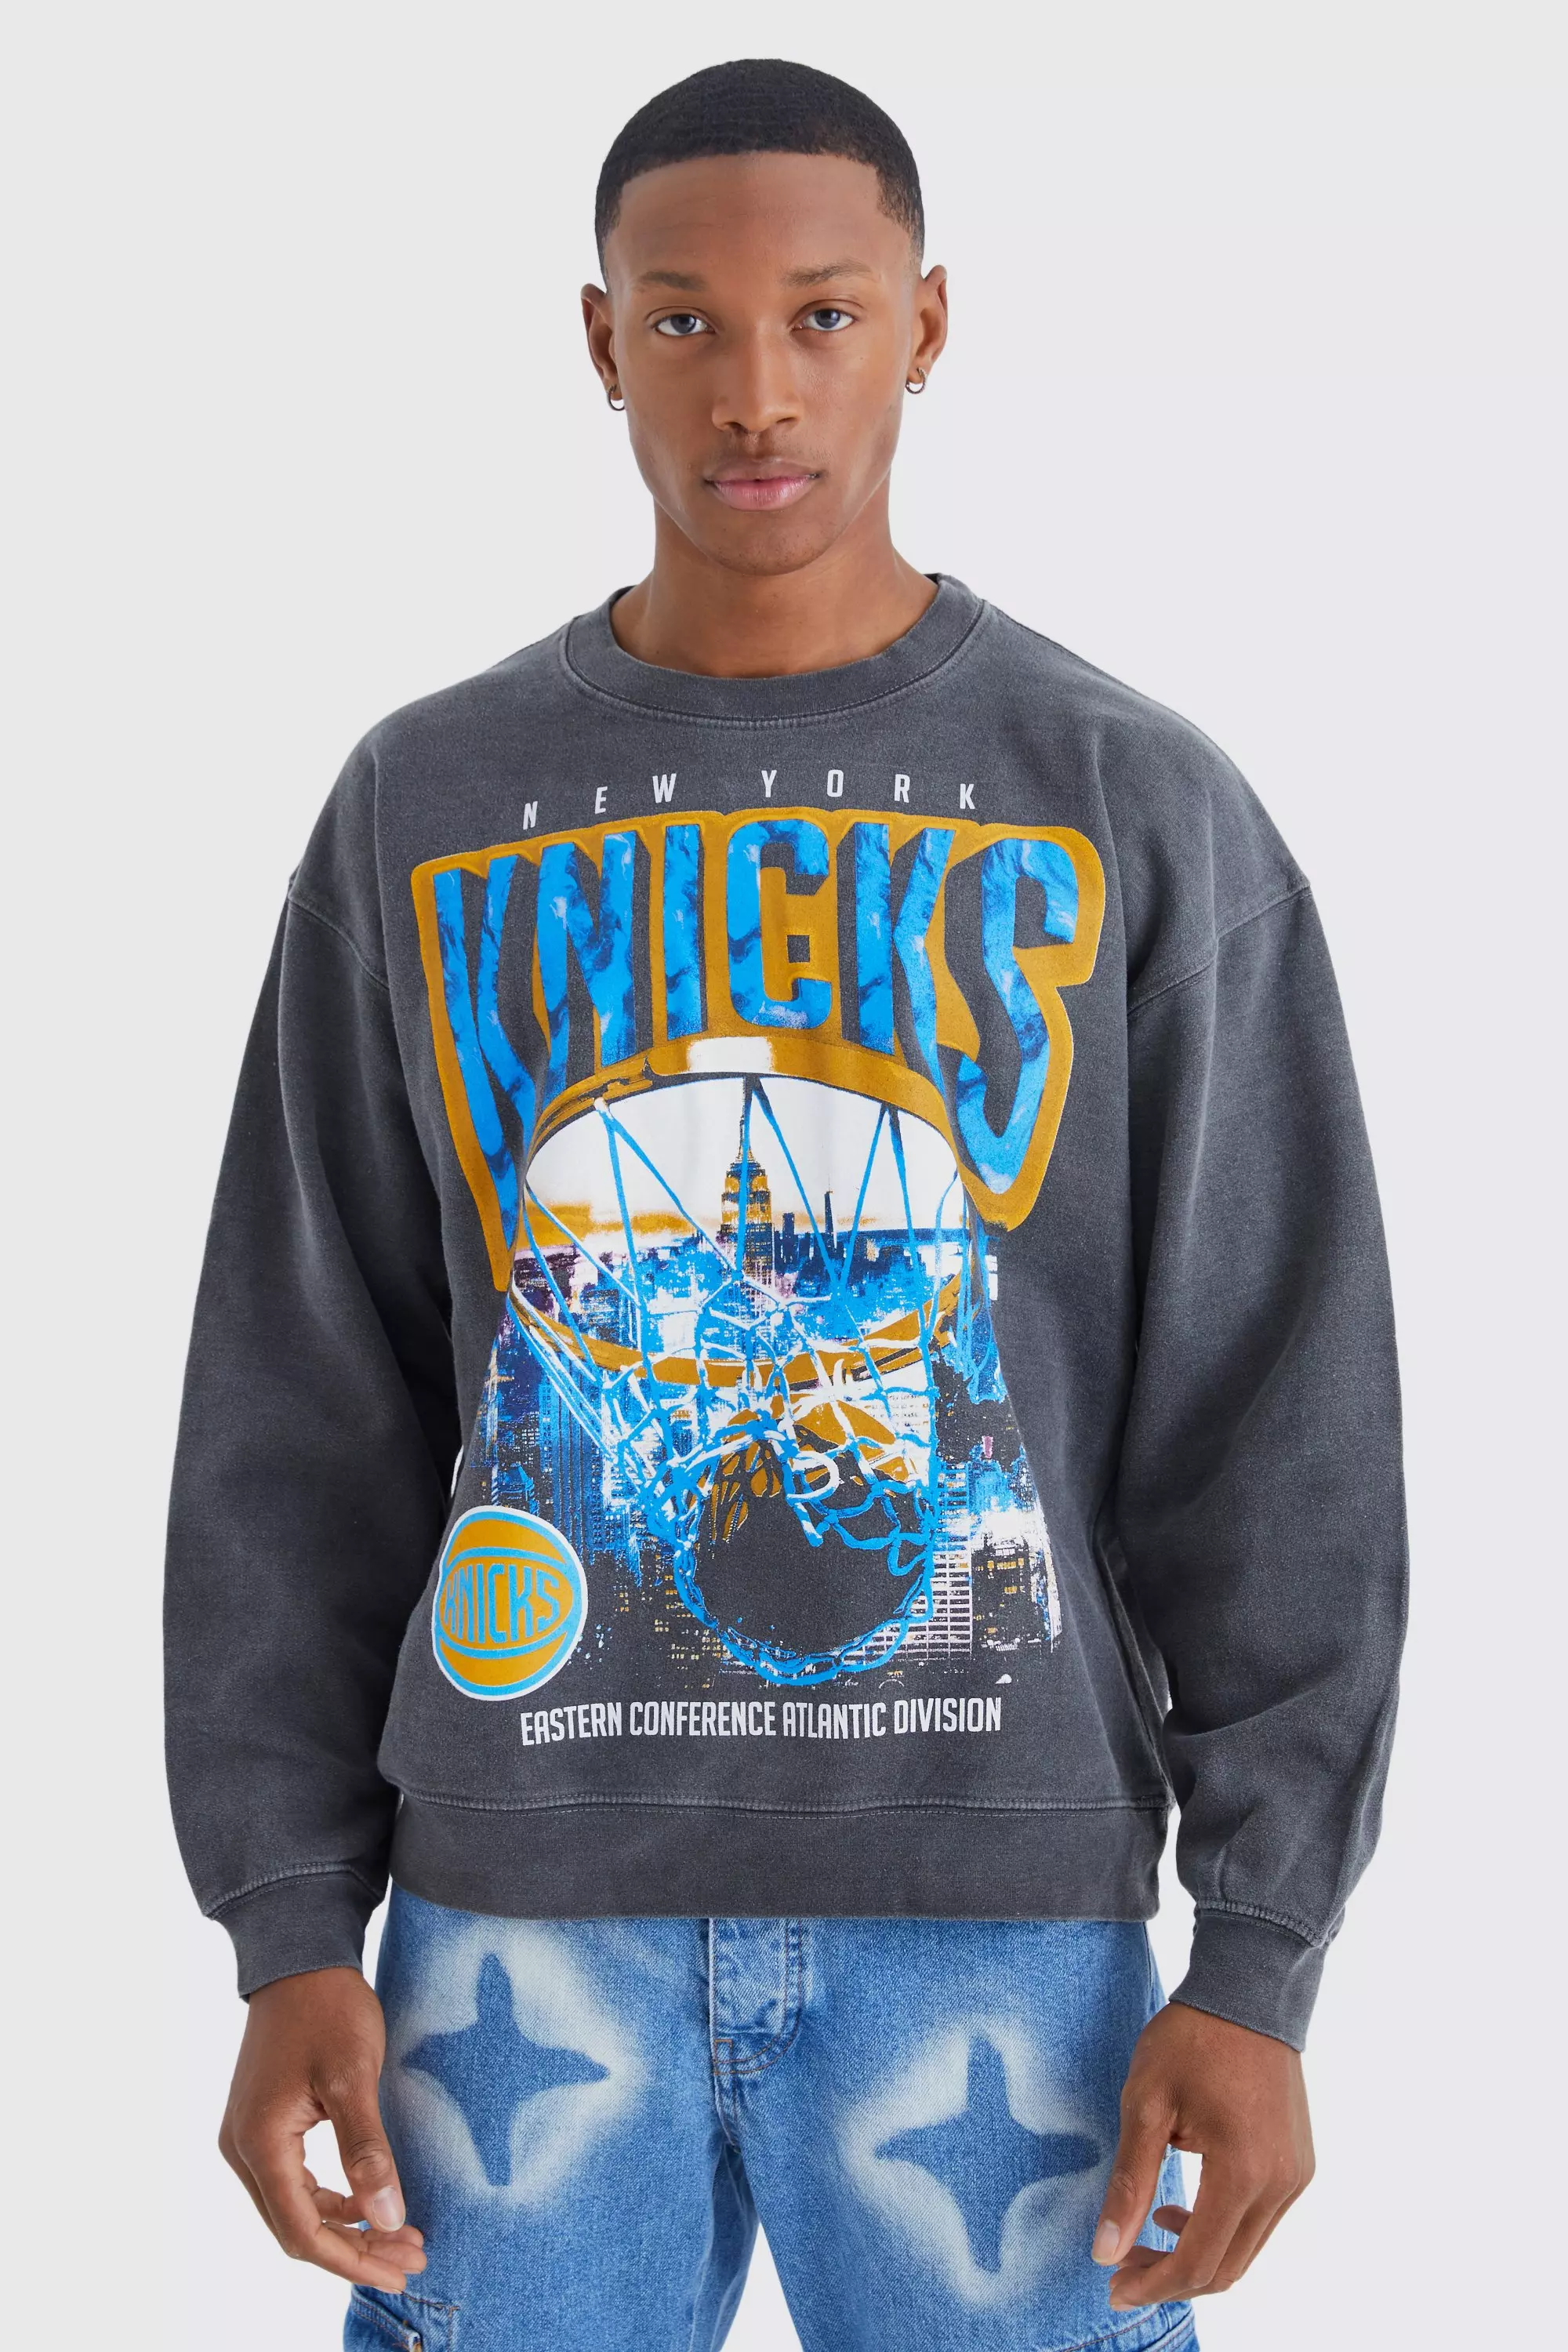 Knicks Basketball Friends Inspired Crewneck Sweatshirt